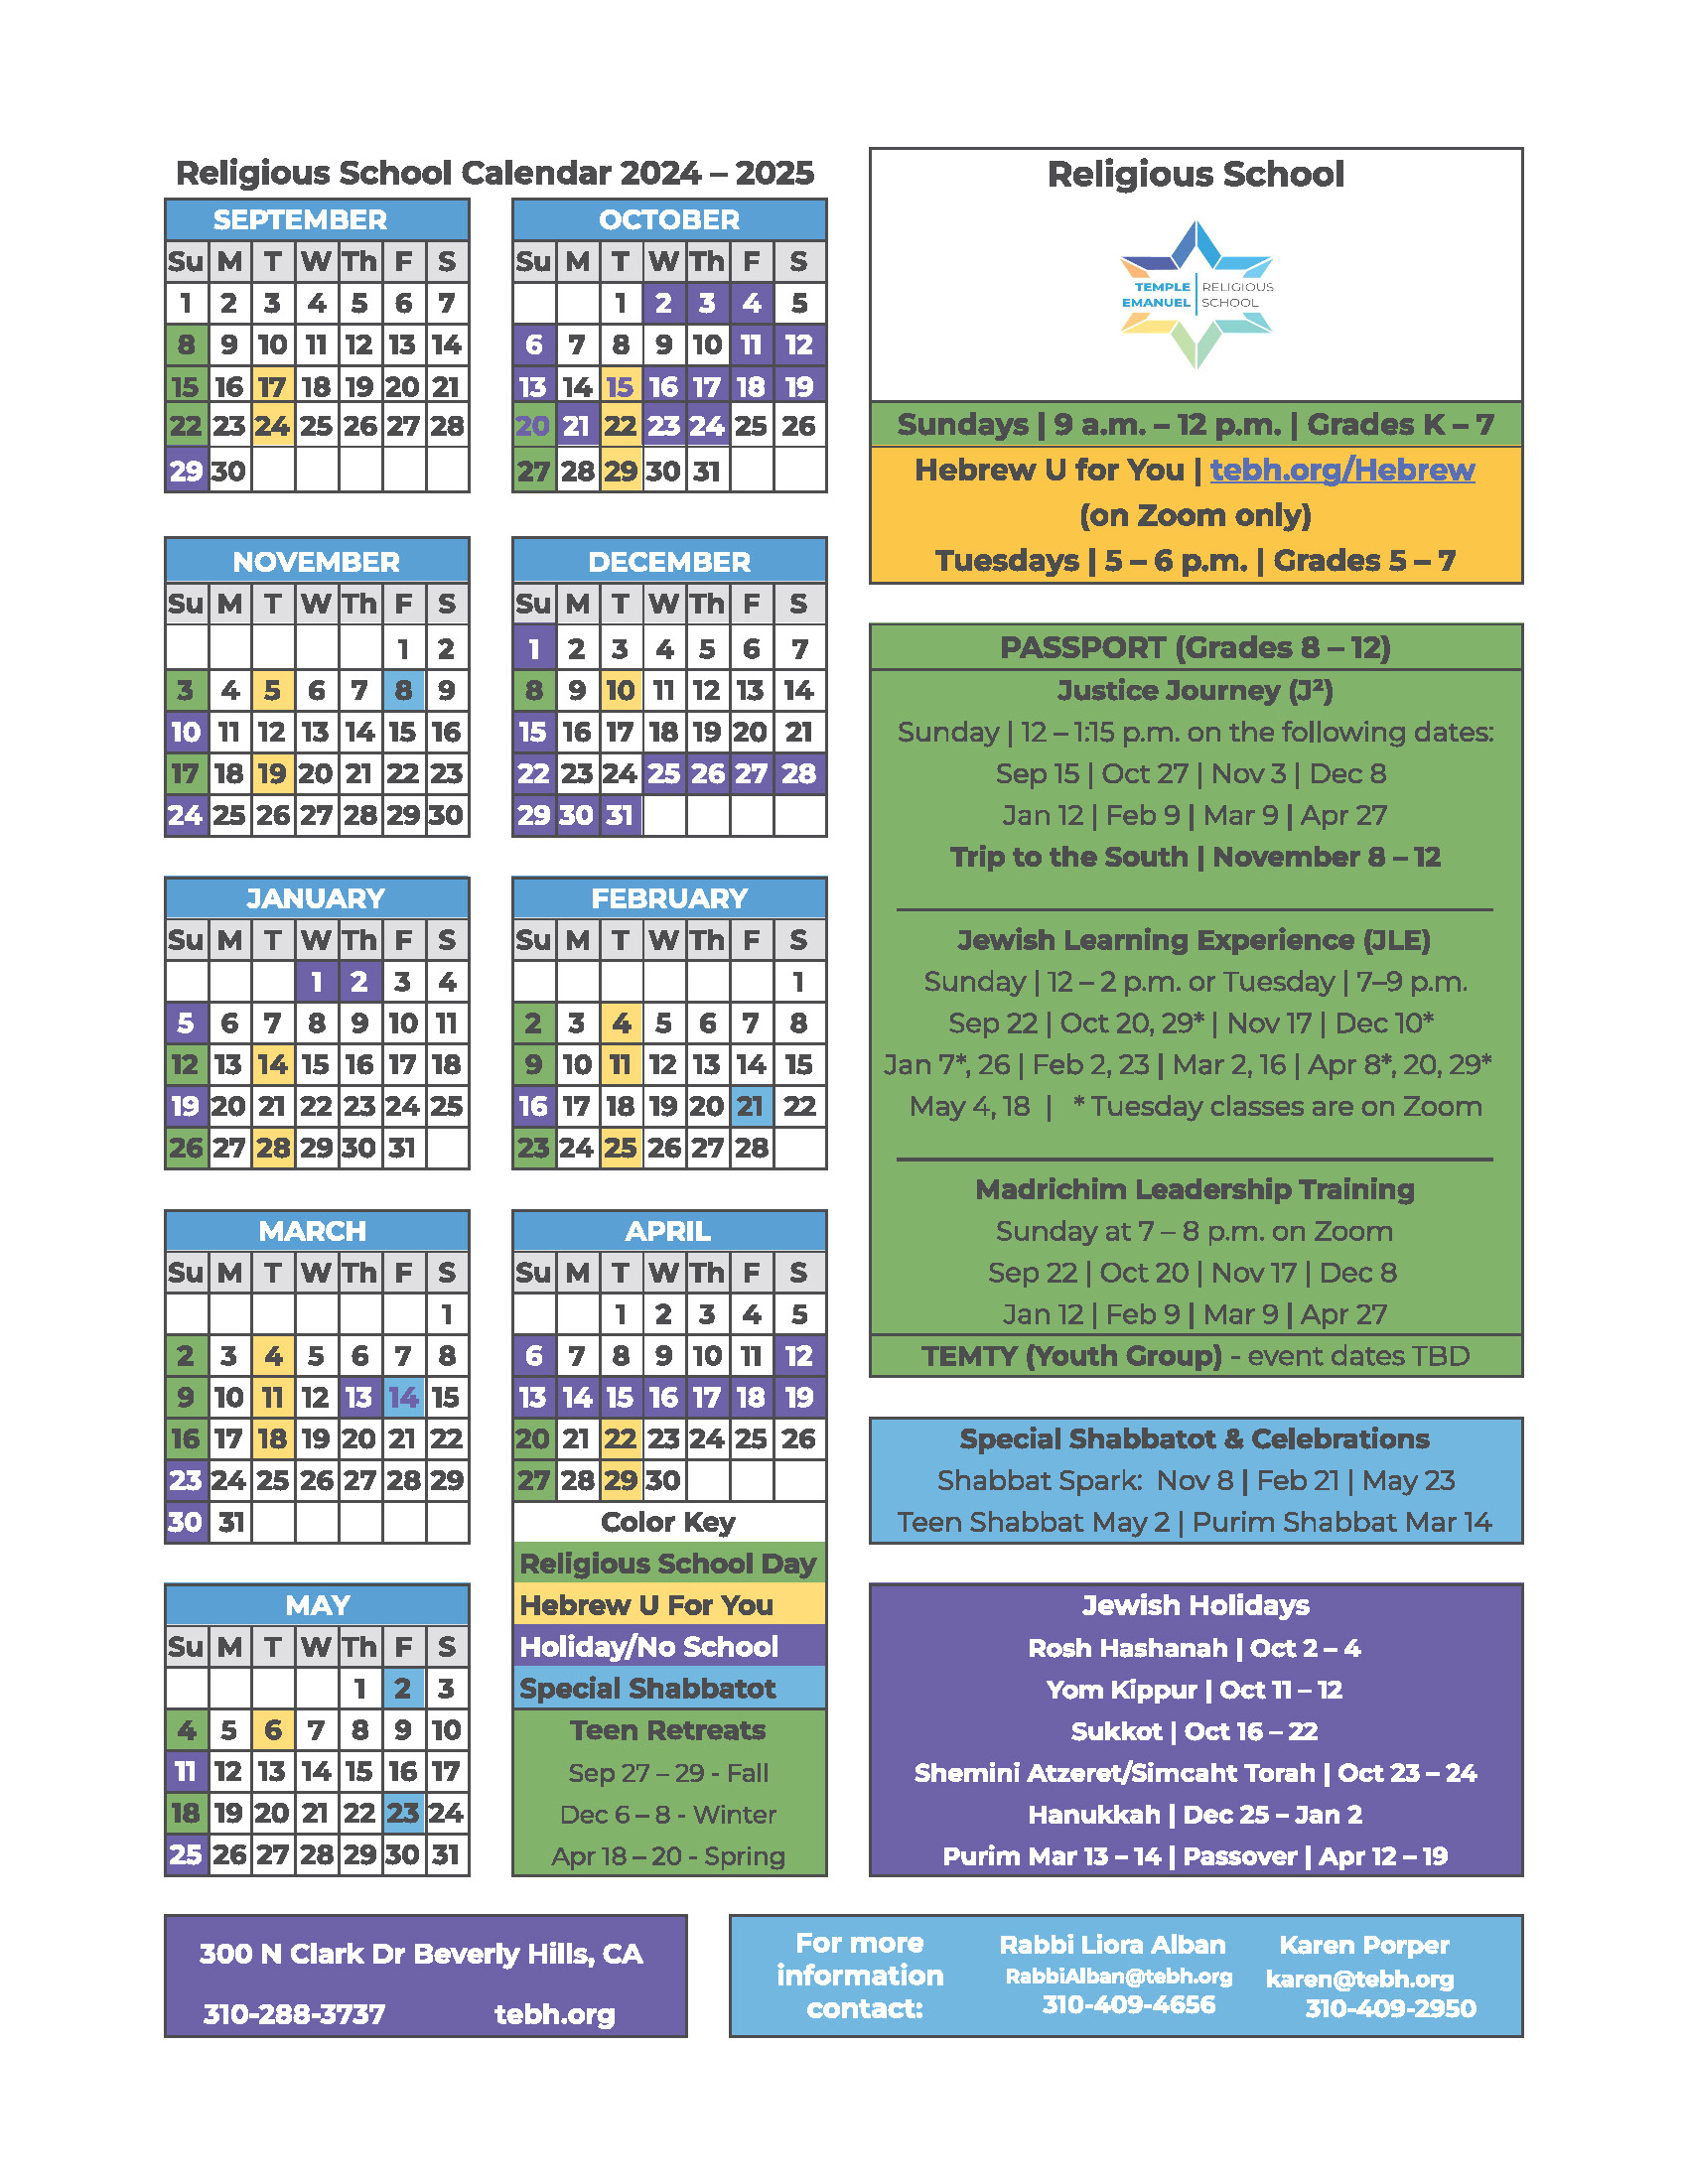 Religious School Calendar for the 2023-2024 school year